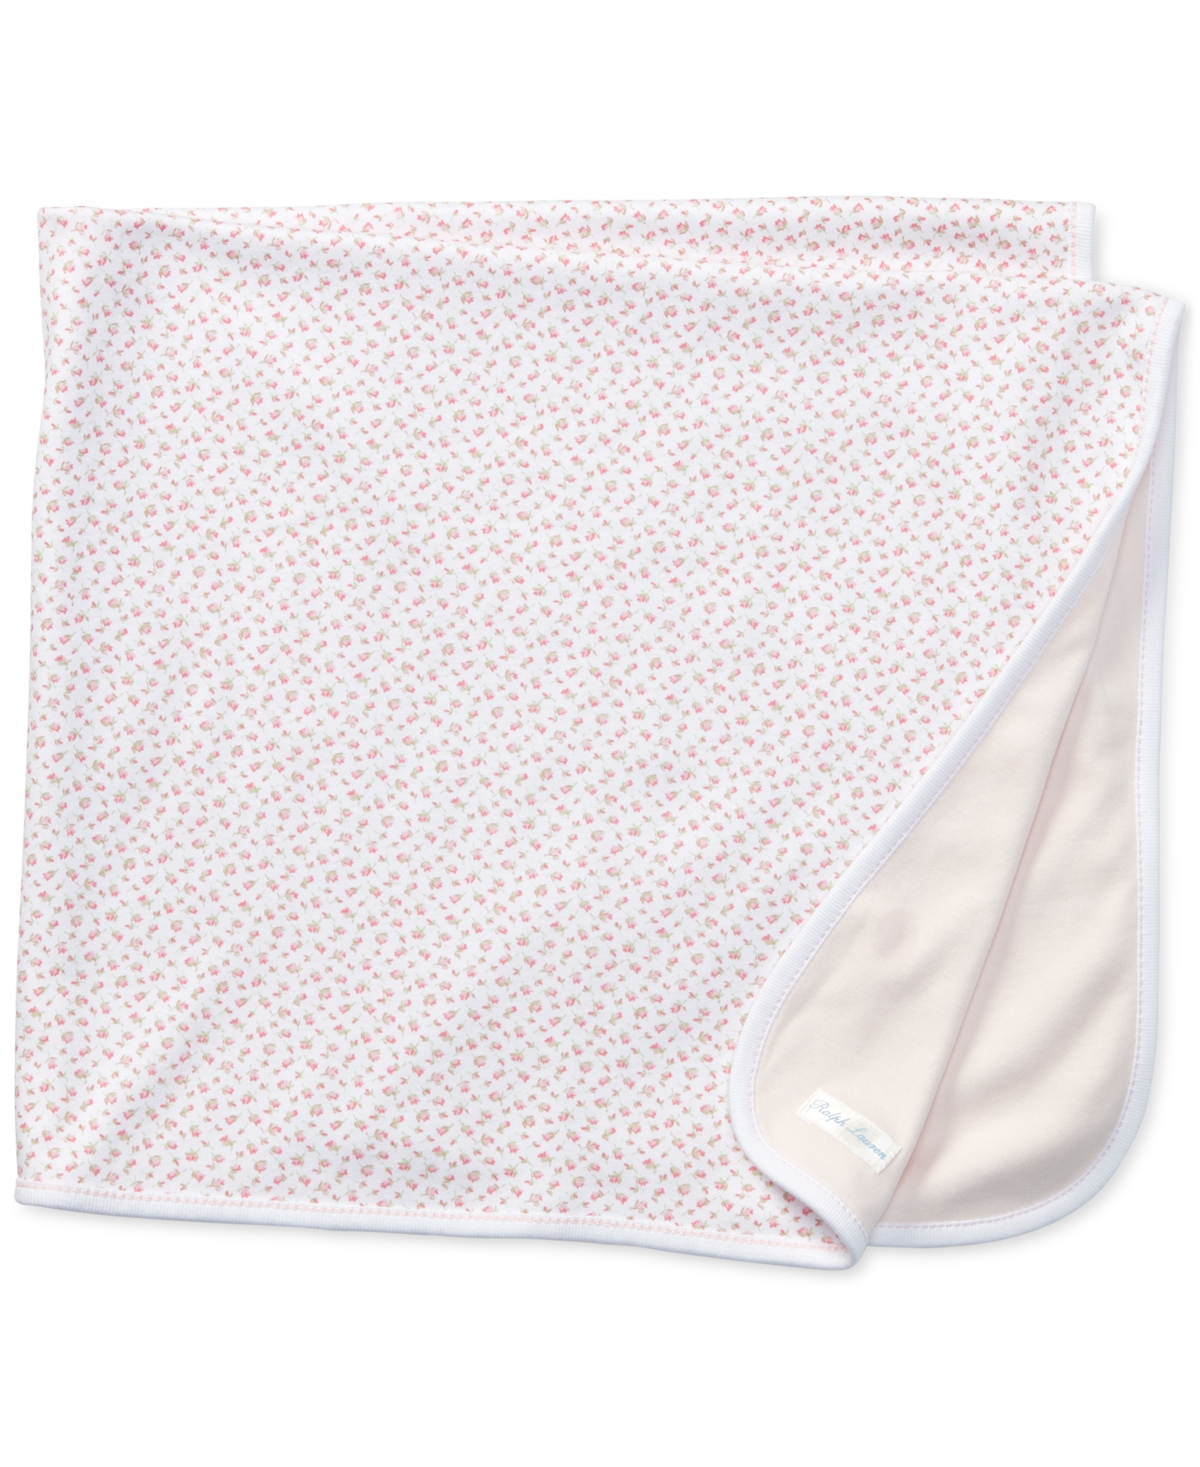 Polo Ralph Lauren Baby Girls Reversible Floral Cotton Blanket In Delicate Pink